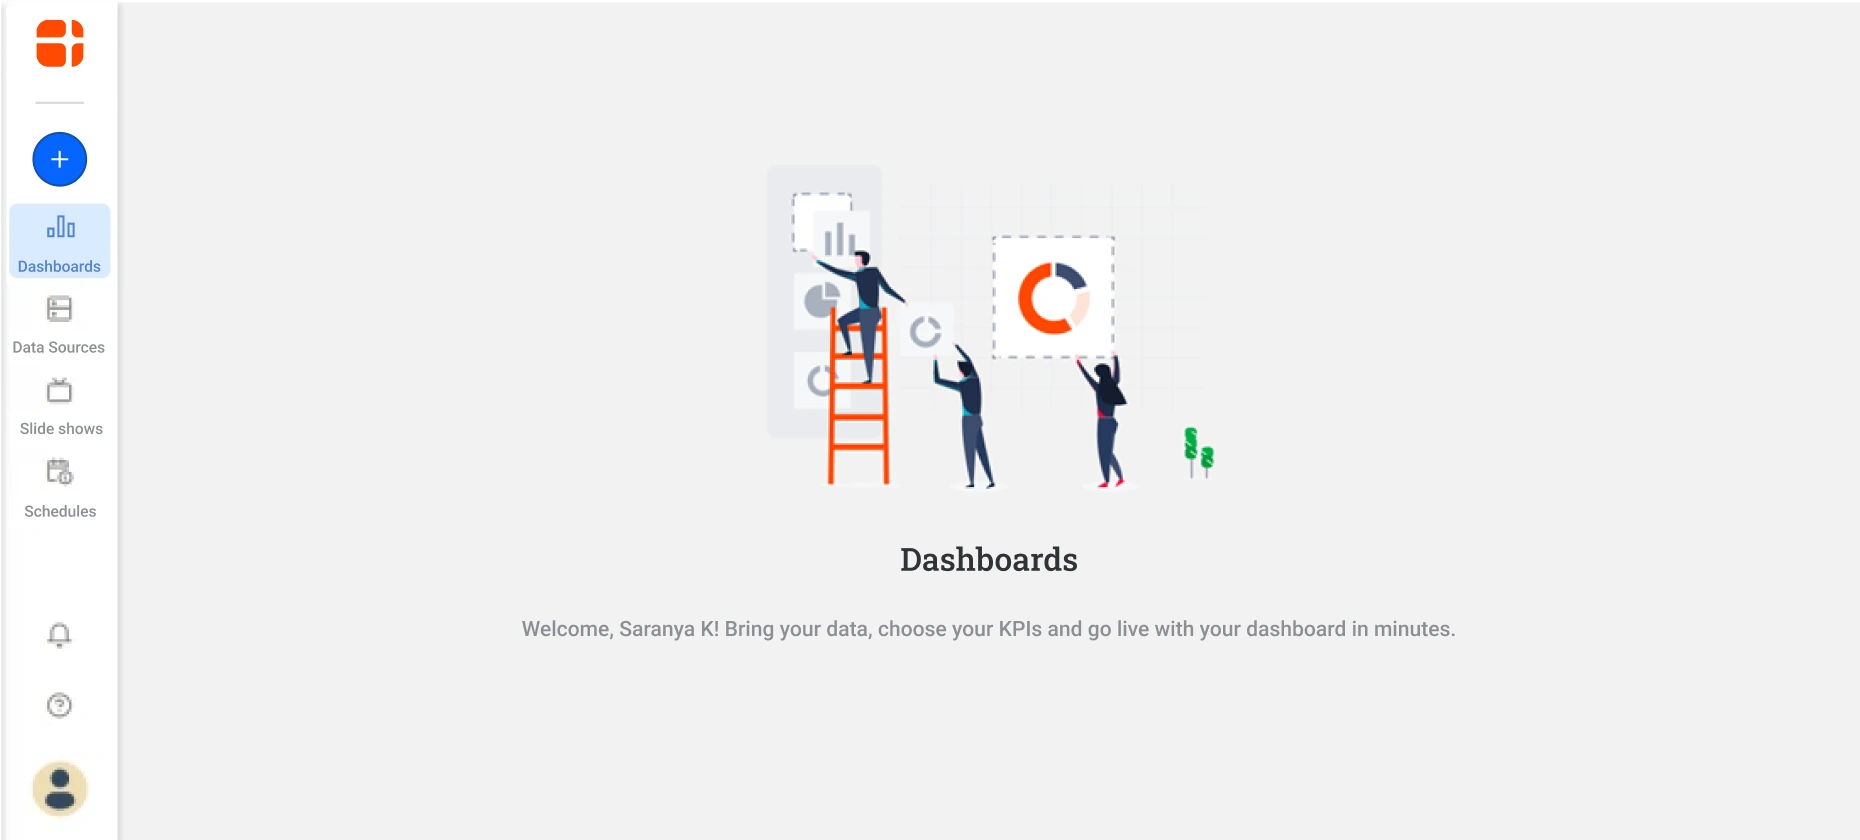 Homepage View of Bold BI Dashboards